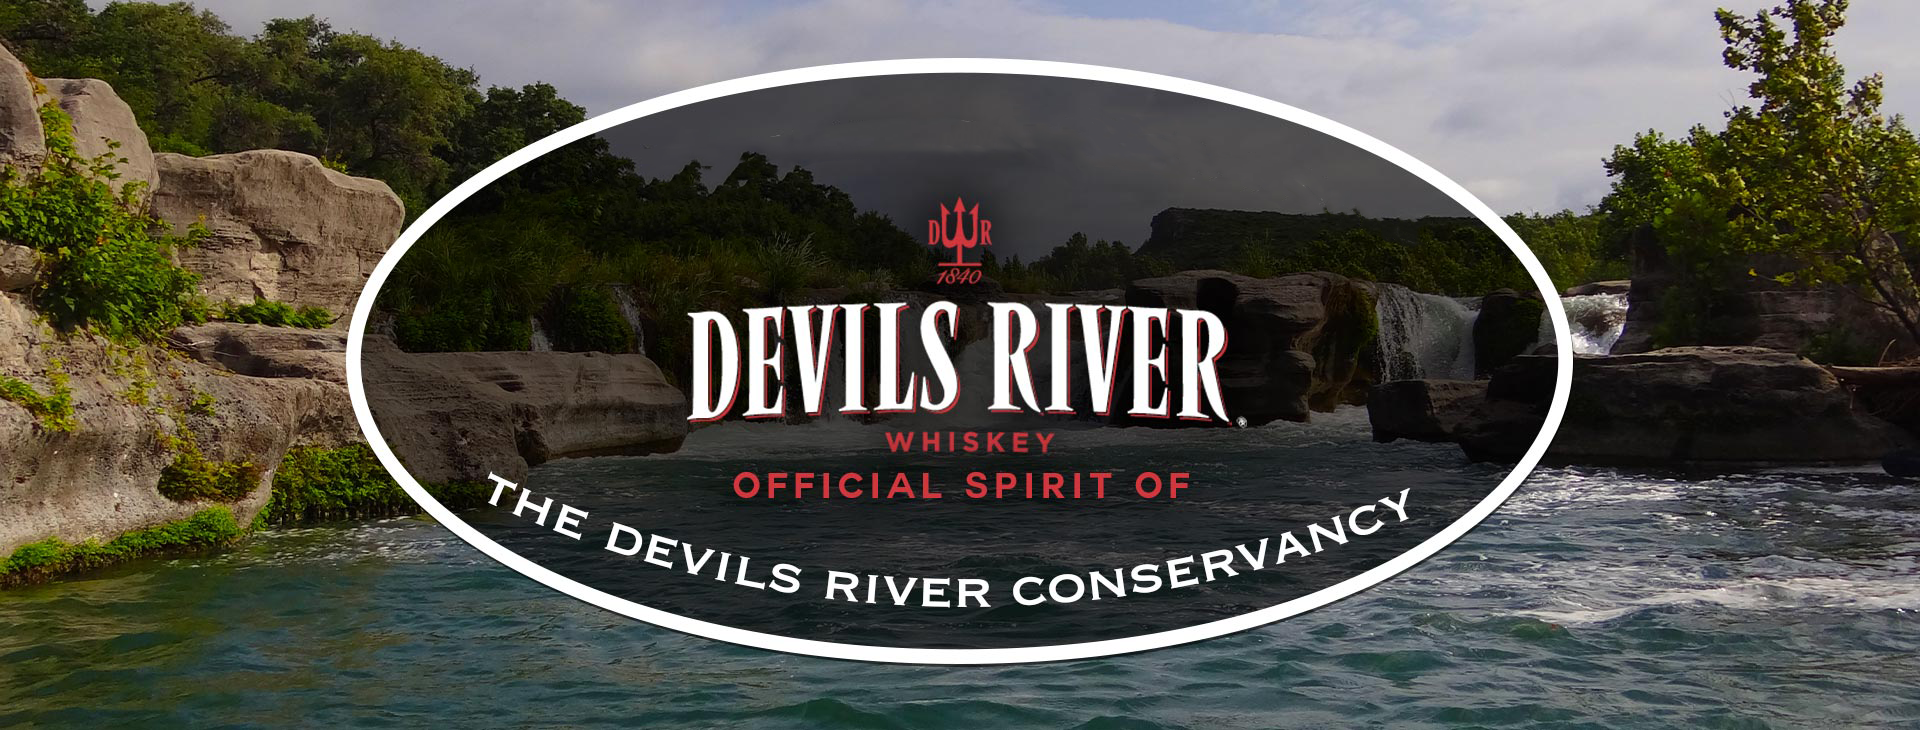 Devils-River-Whiskey-2.png